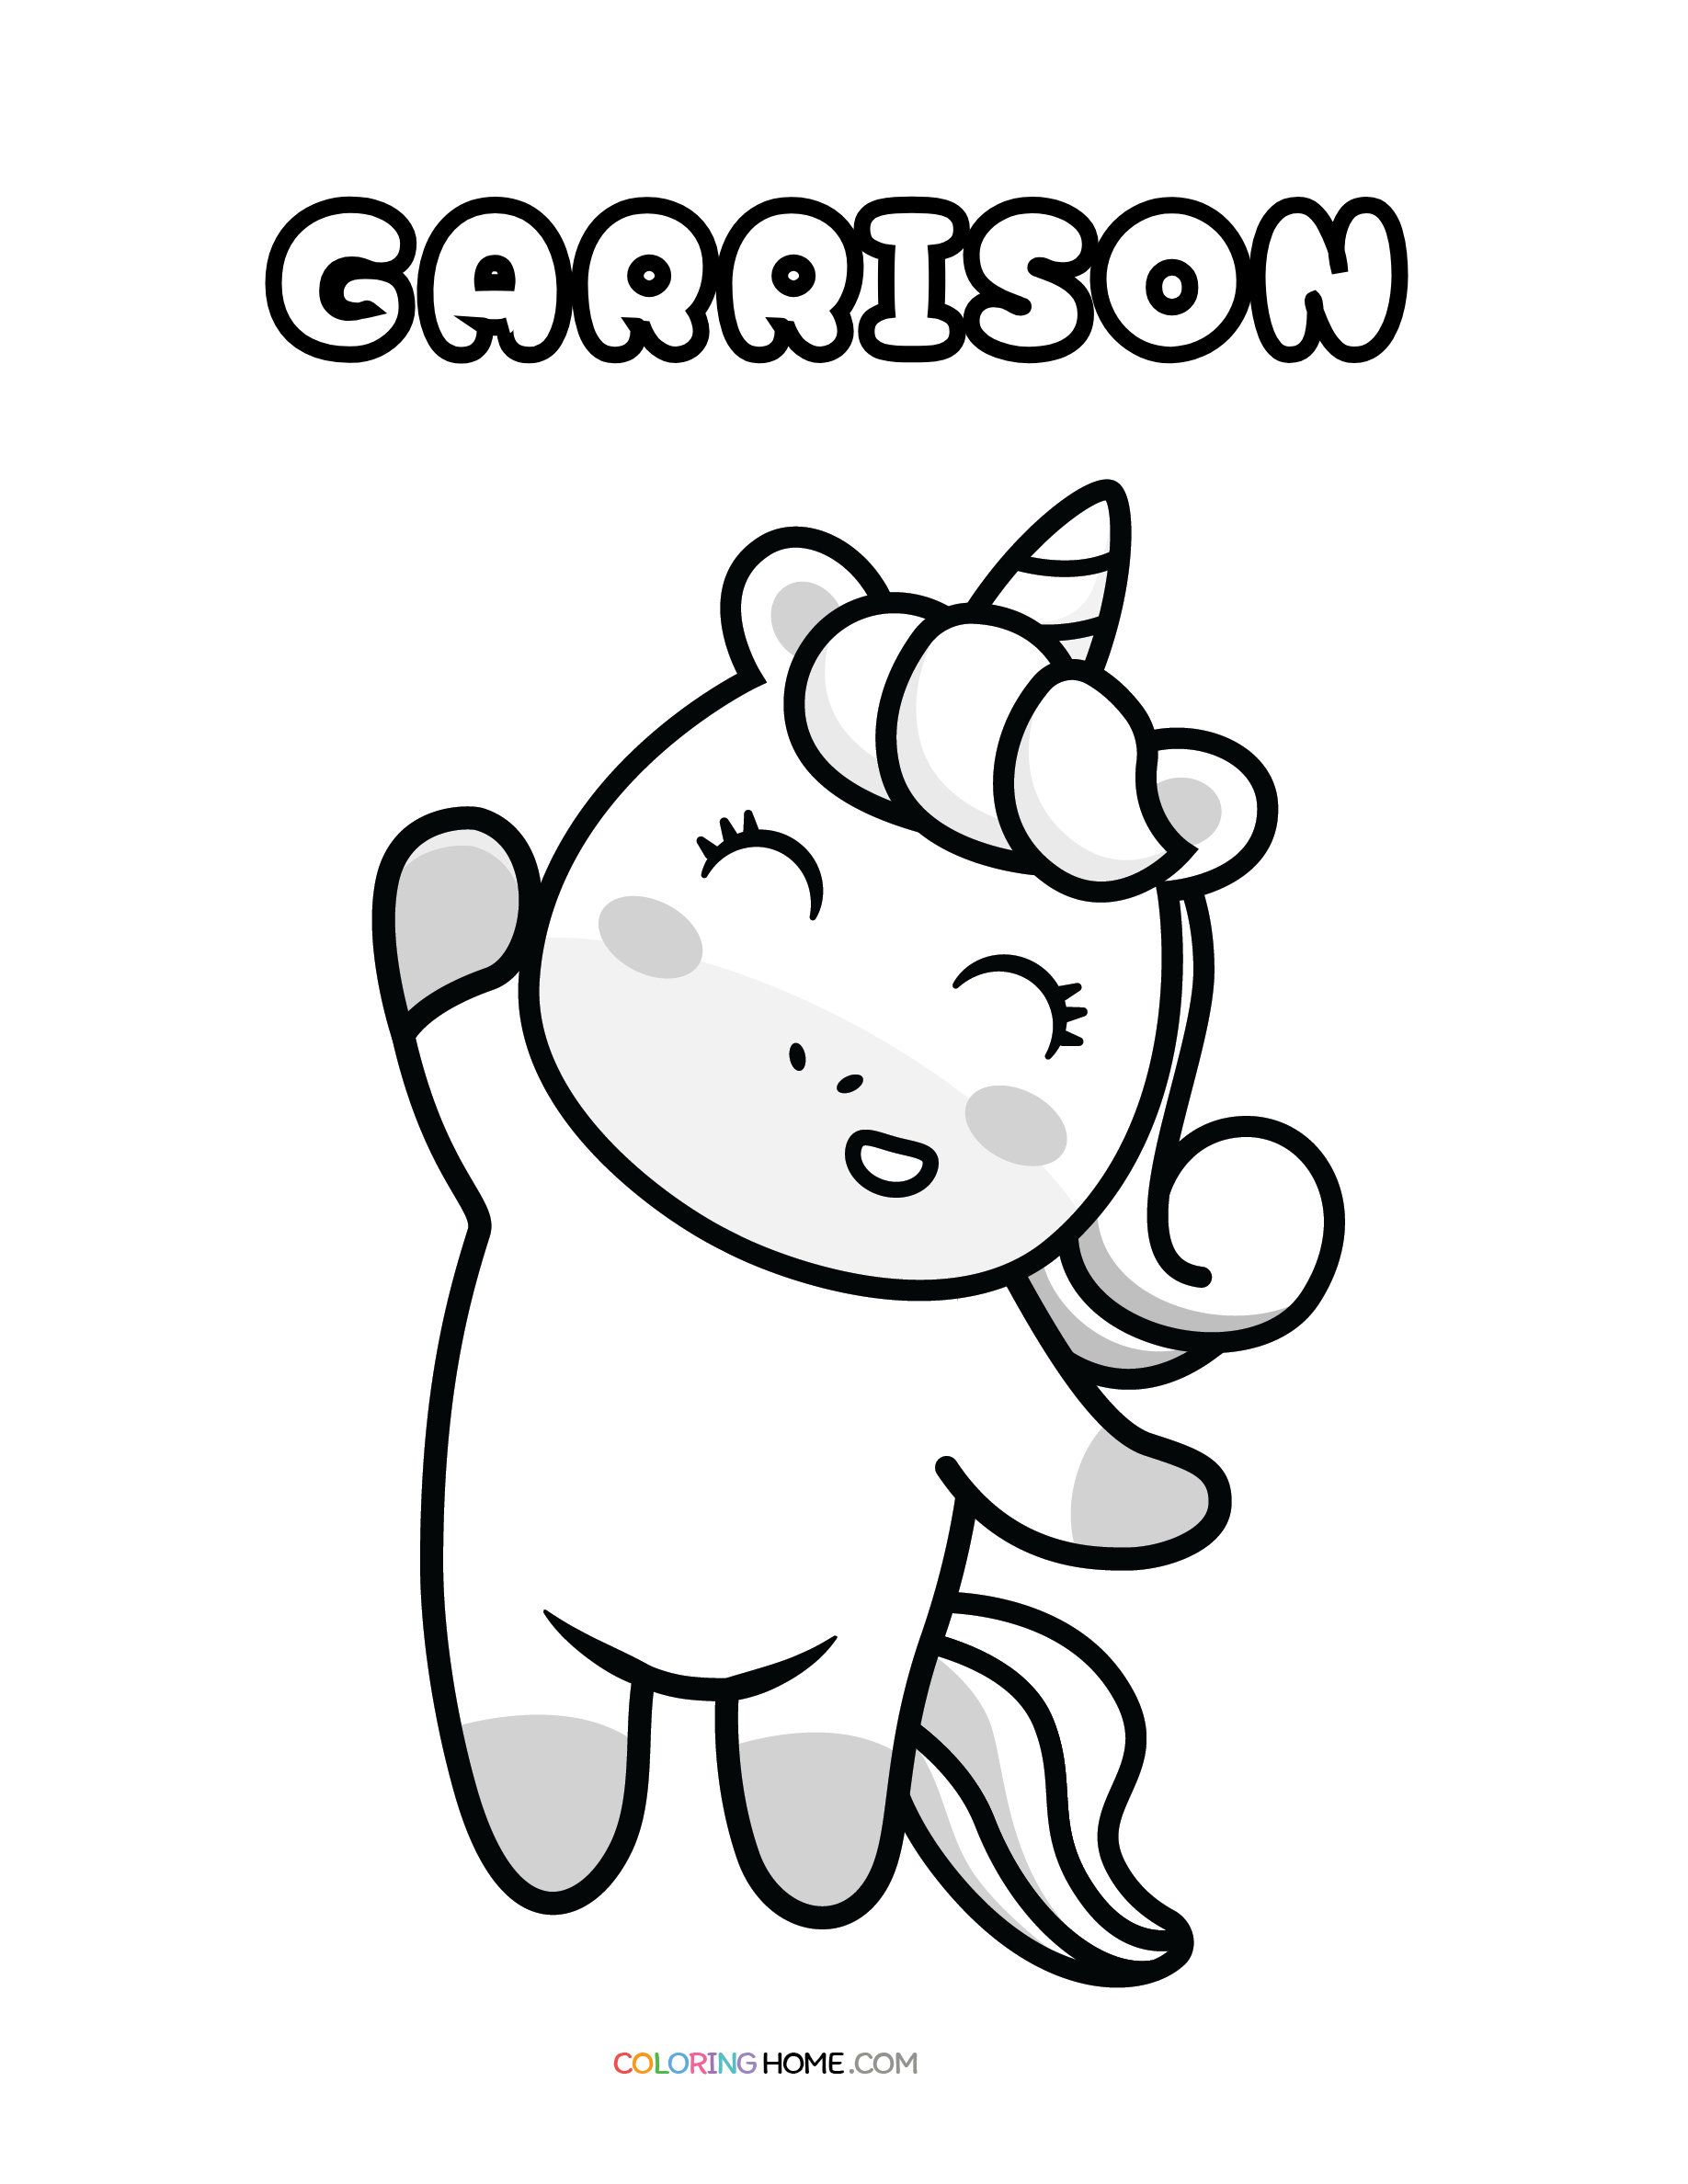 Garrison unicorn coloring page